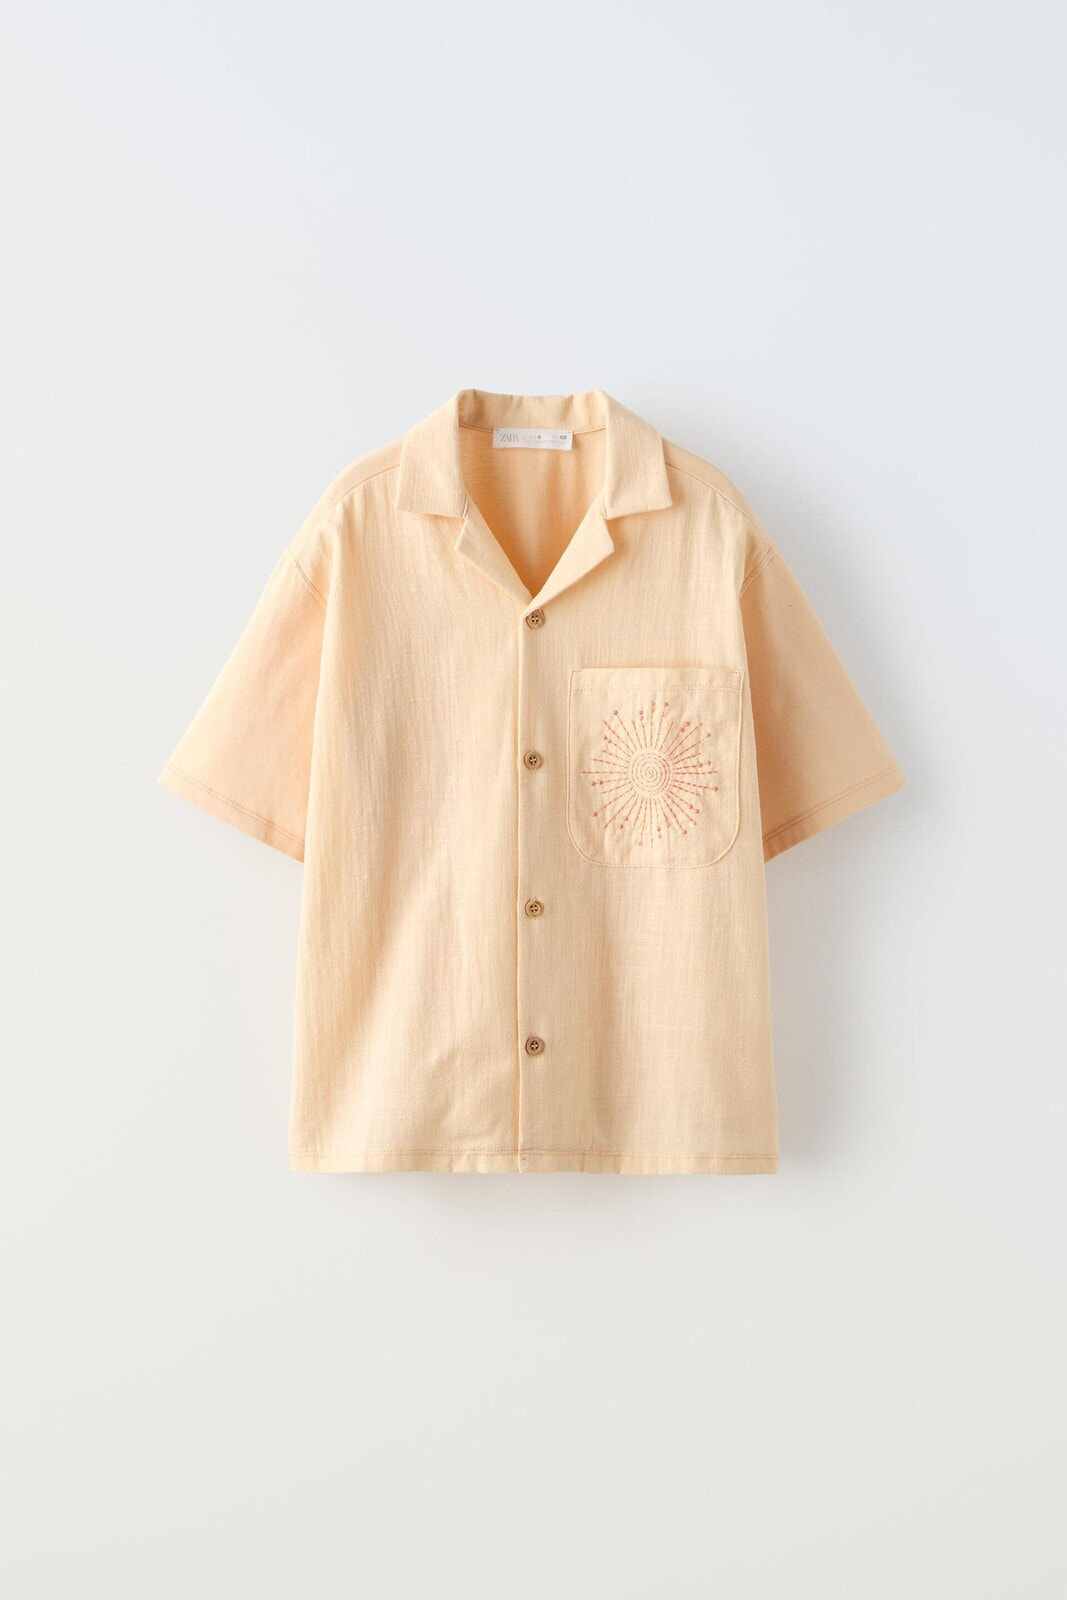 Embroidered sun shirt